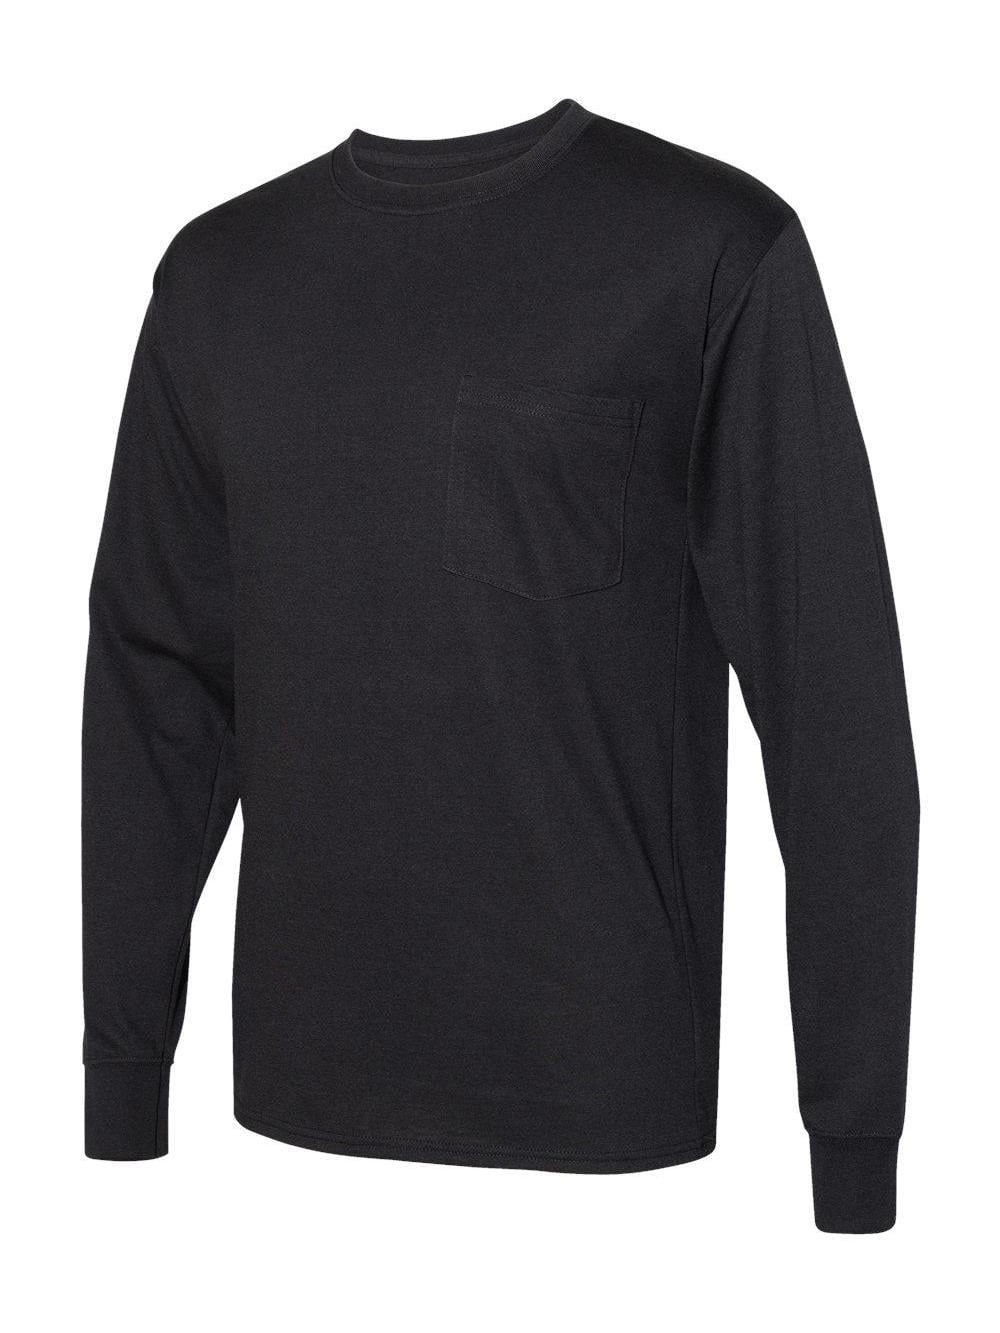 Hanes W120 Adult Workwear Long-Sleeve Pocket T-Shirt 